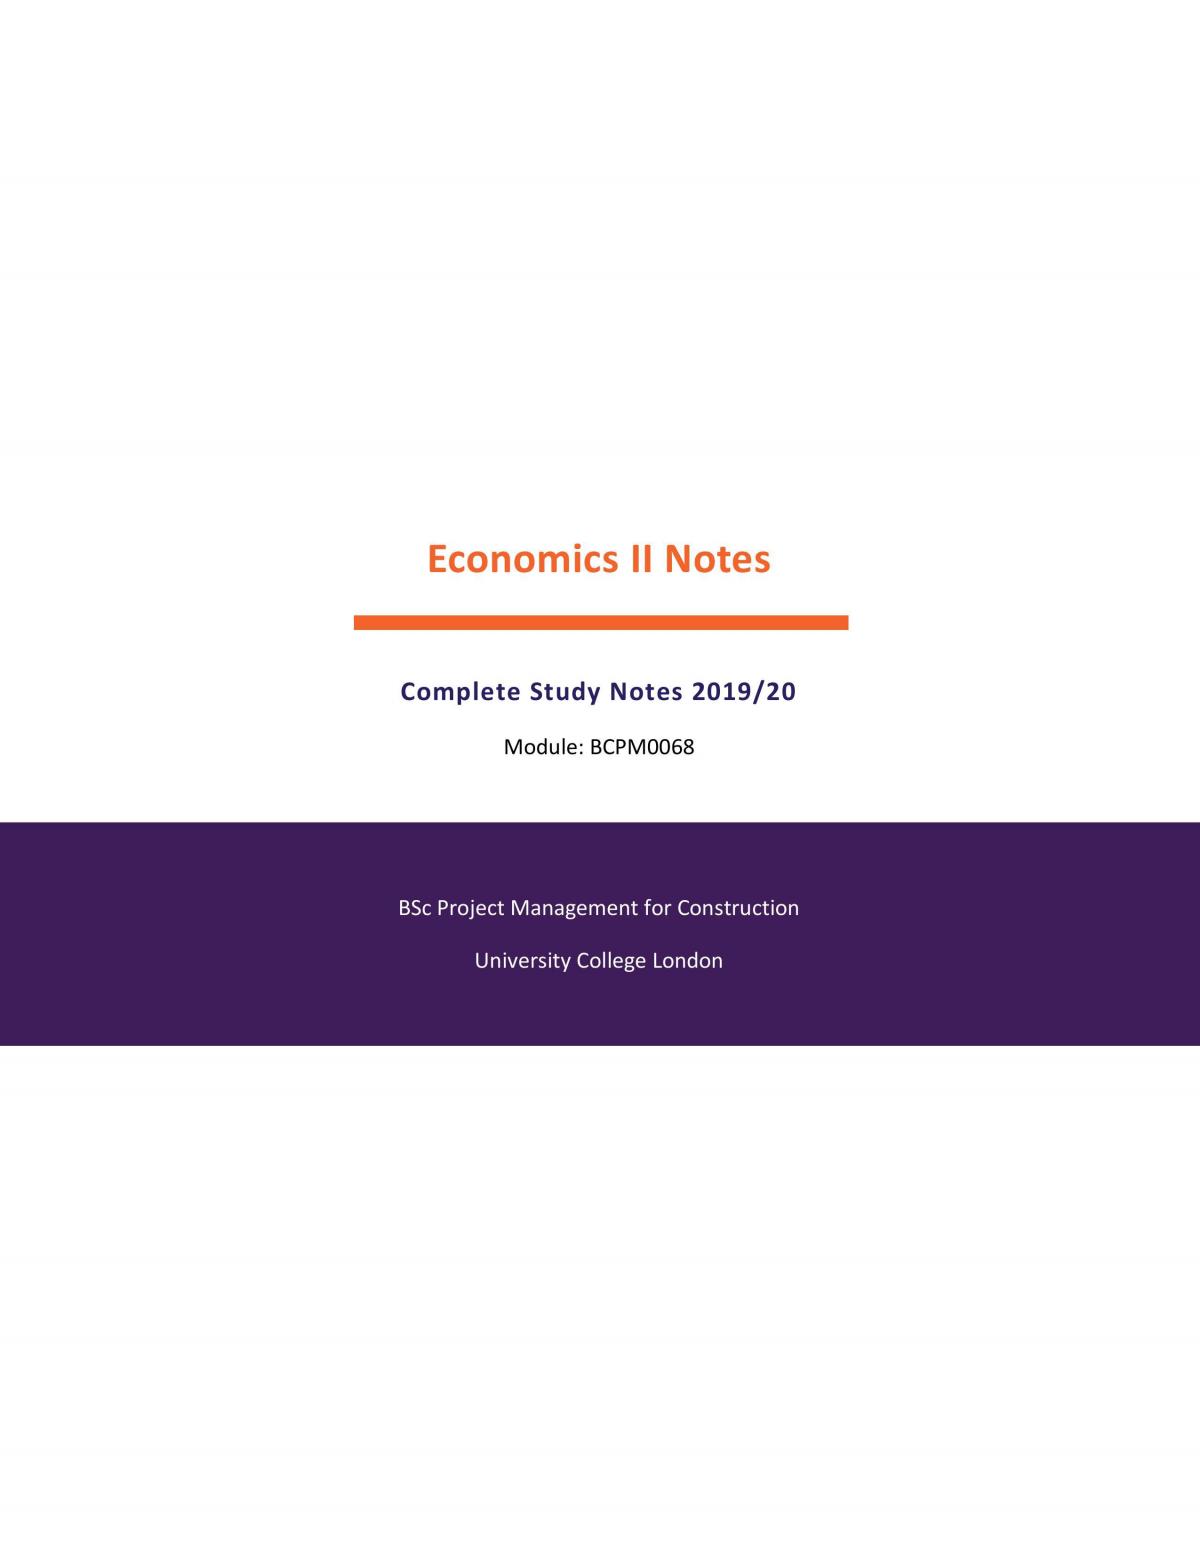 Economics II Complete Study Notes - Page 1